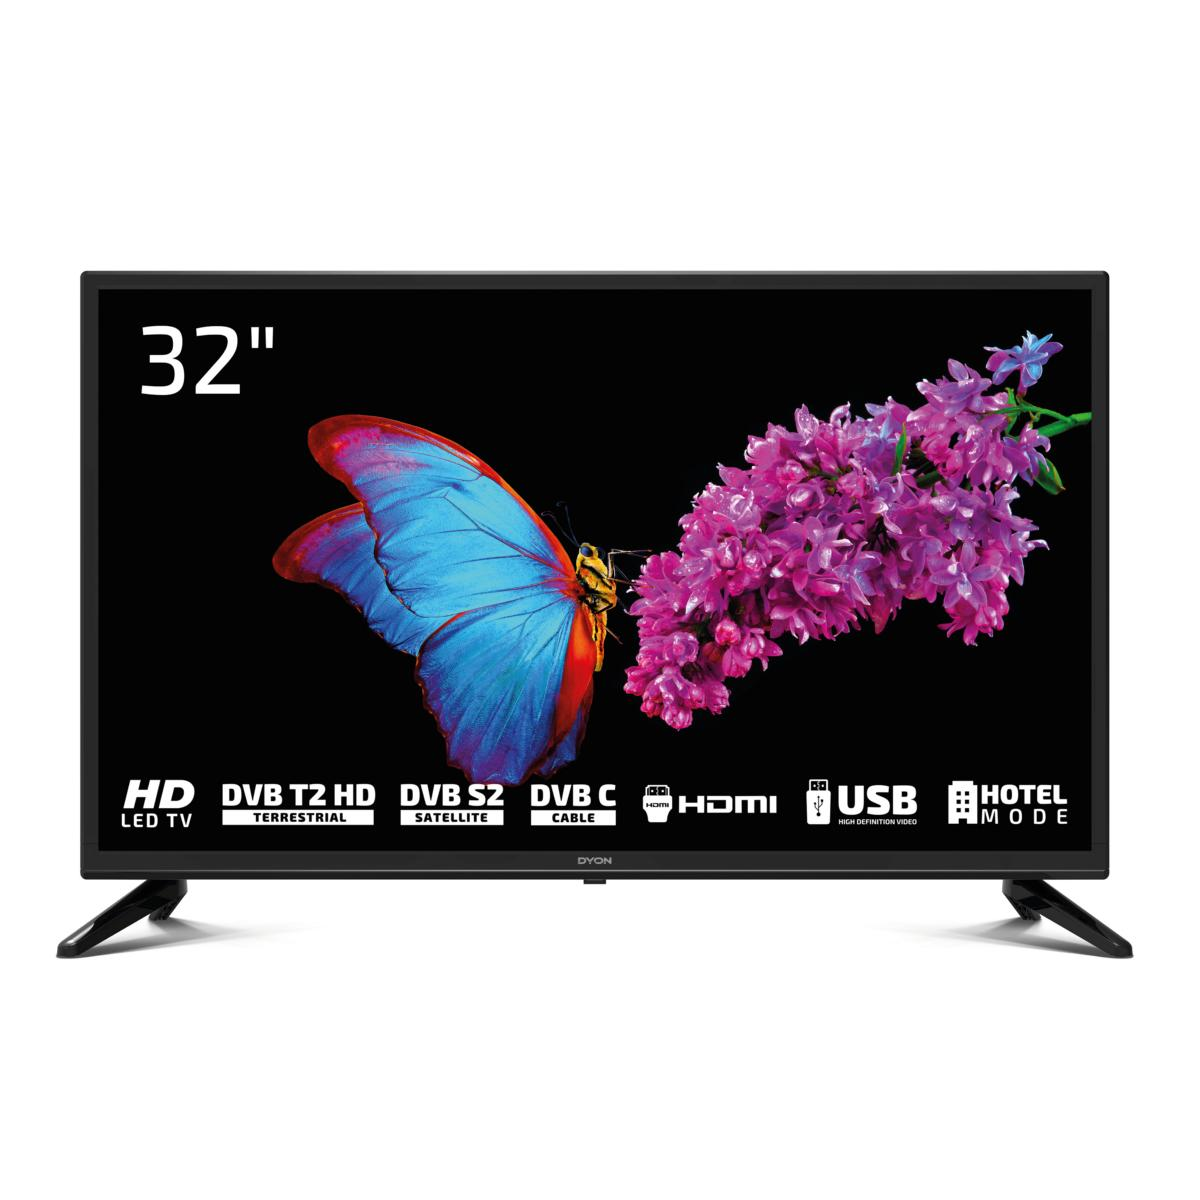 32 / LED 32 cm, (Flat, 80 V2 Zoll Pro TV Enter HD) X2 DYON